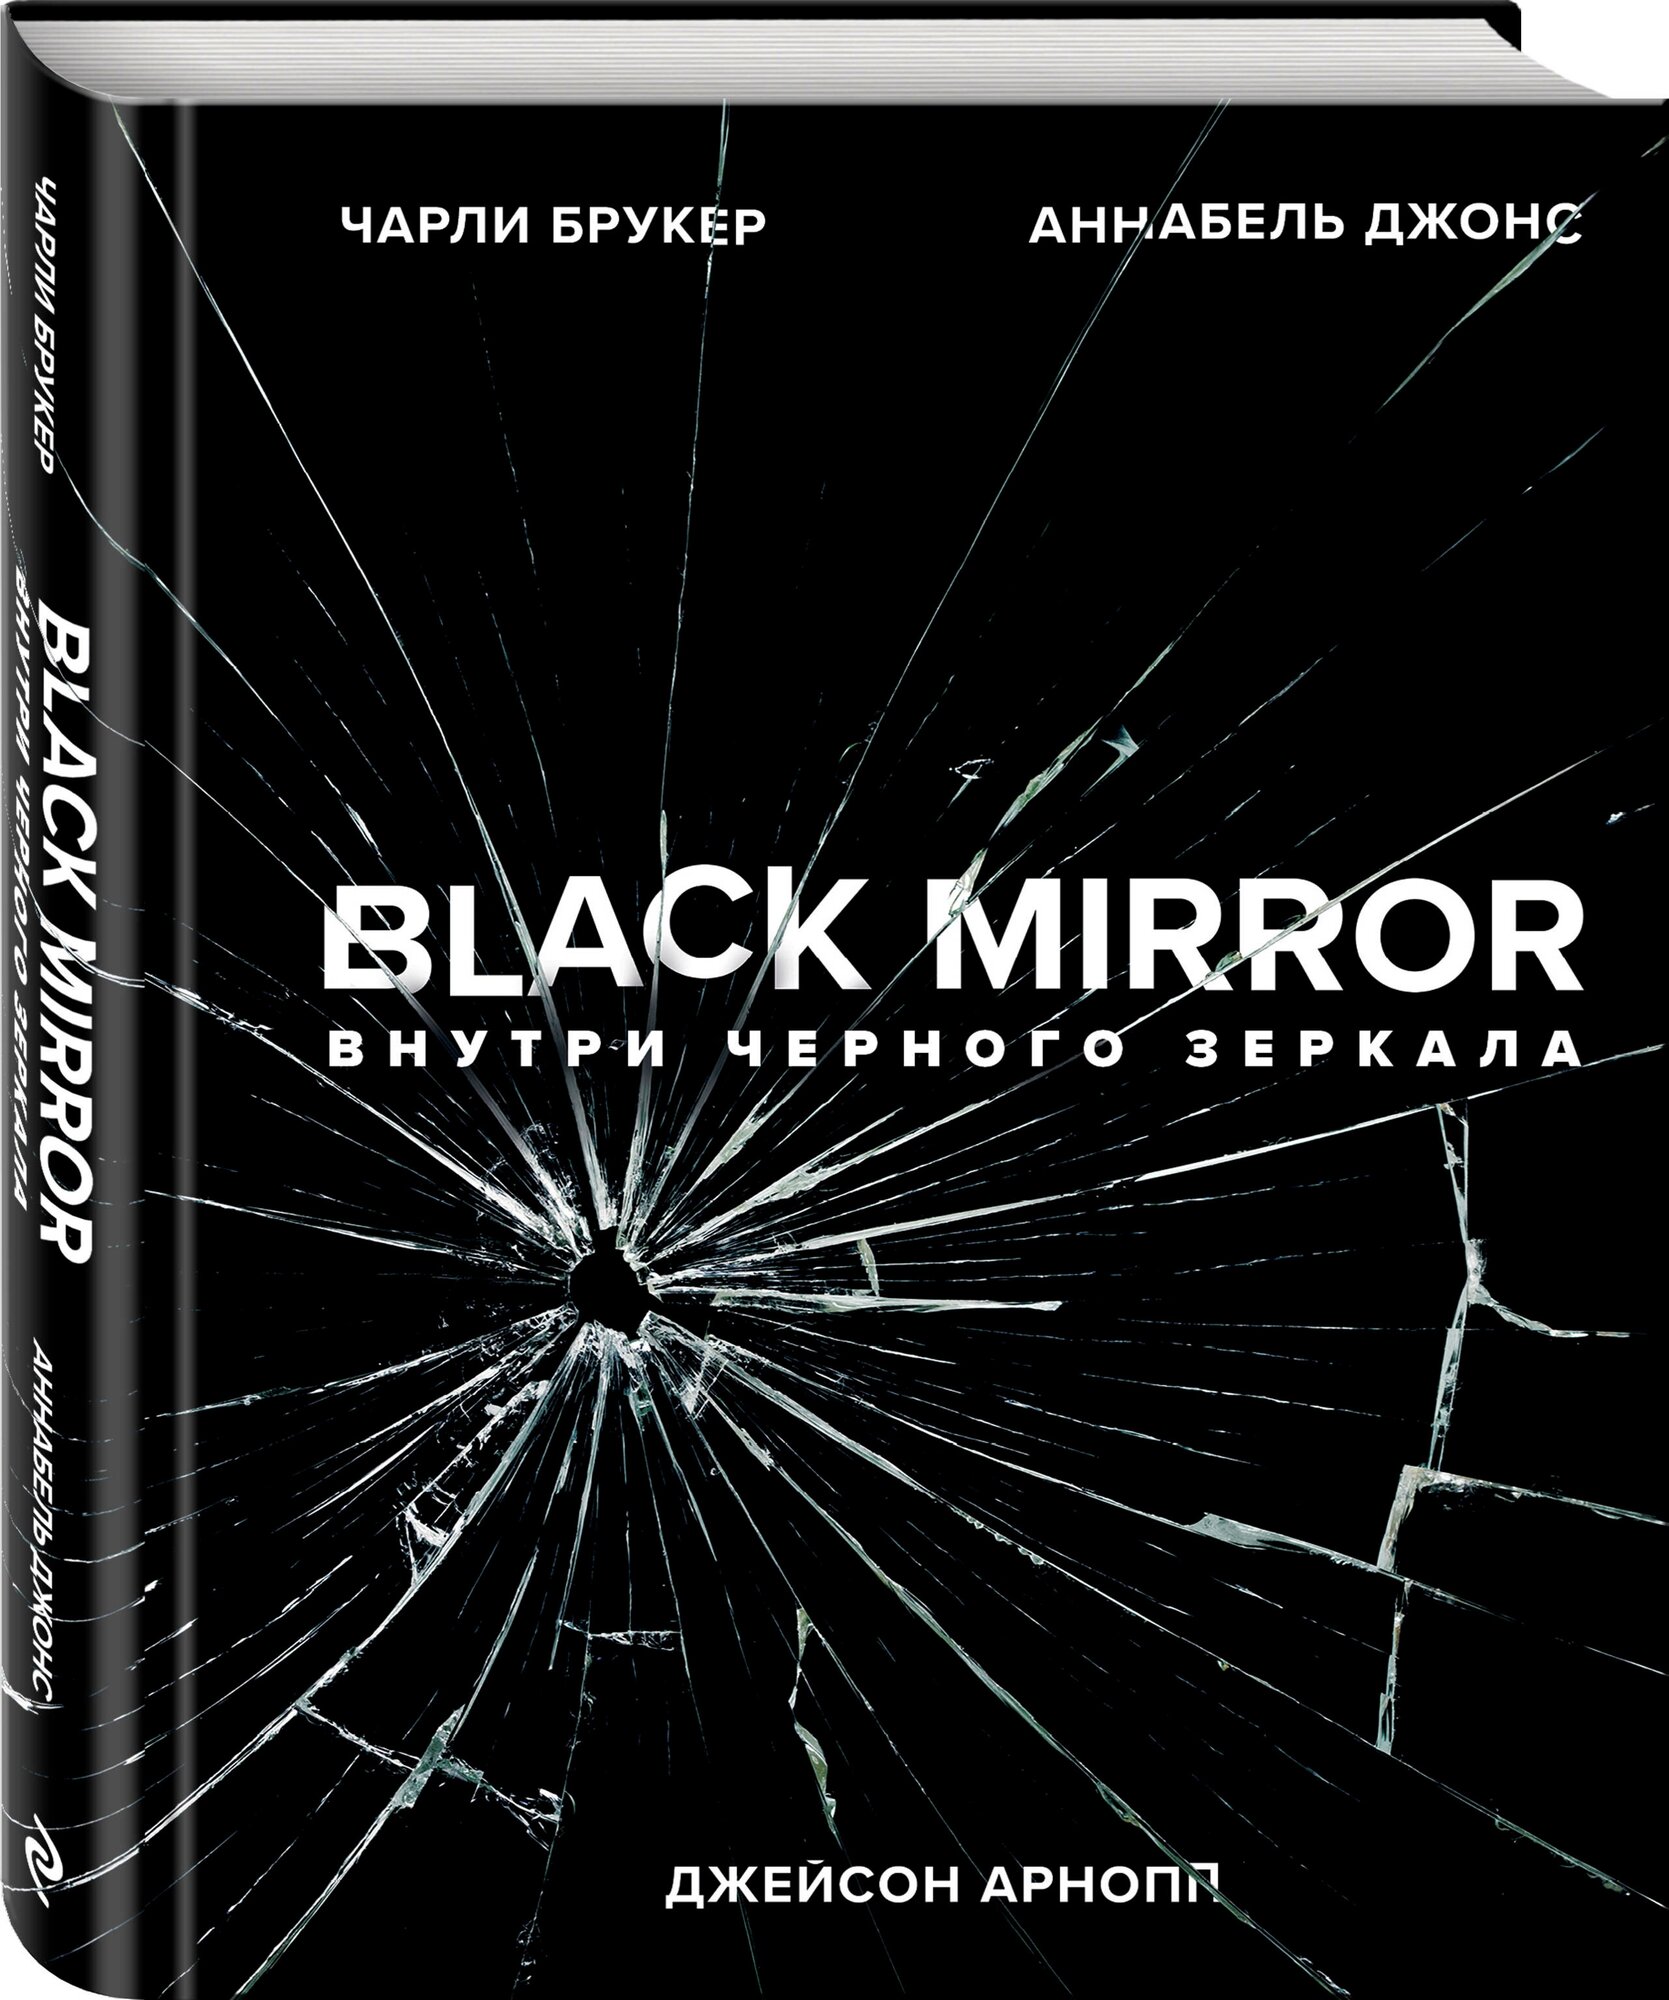 Брукер Ч. Джонс А. Арнопп Дж. "Black Mirror. Внутри Черного Зеркала"